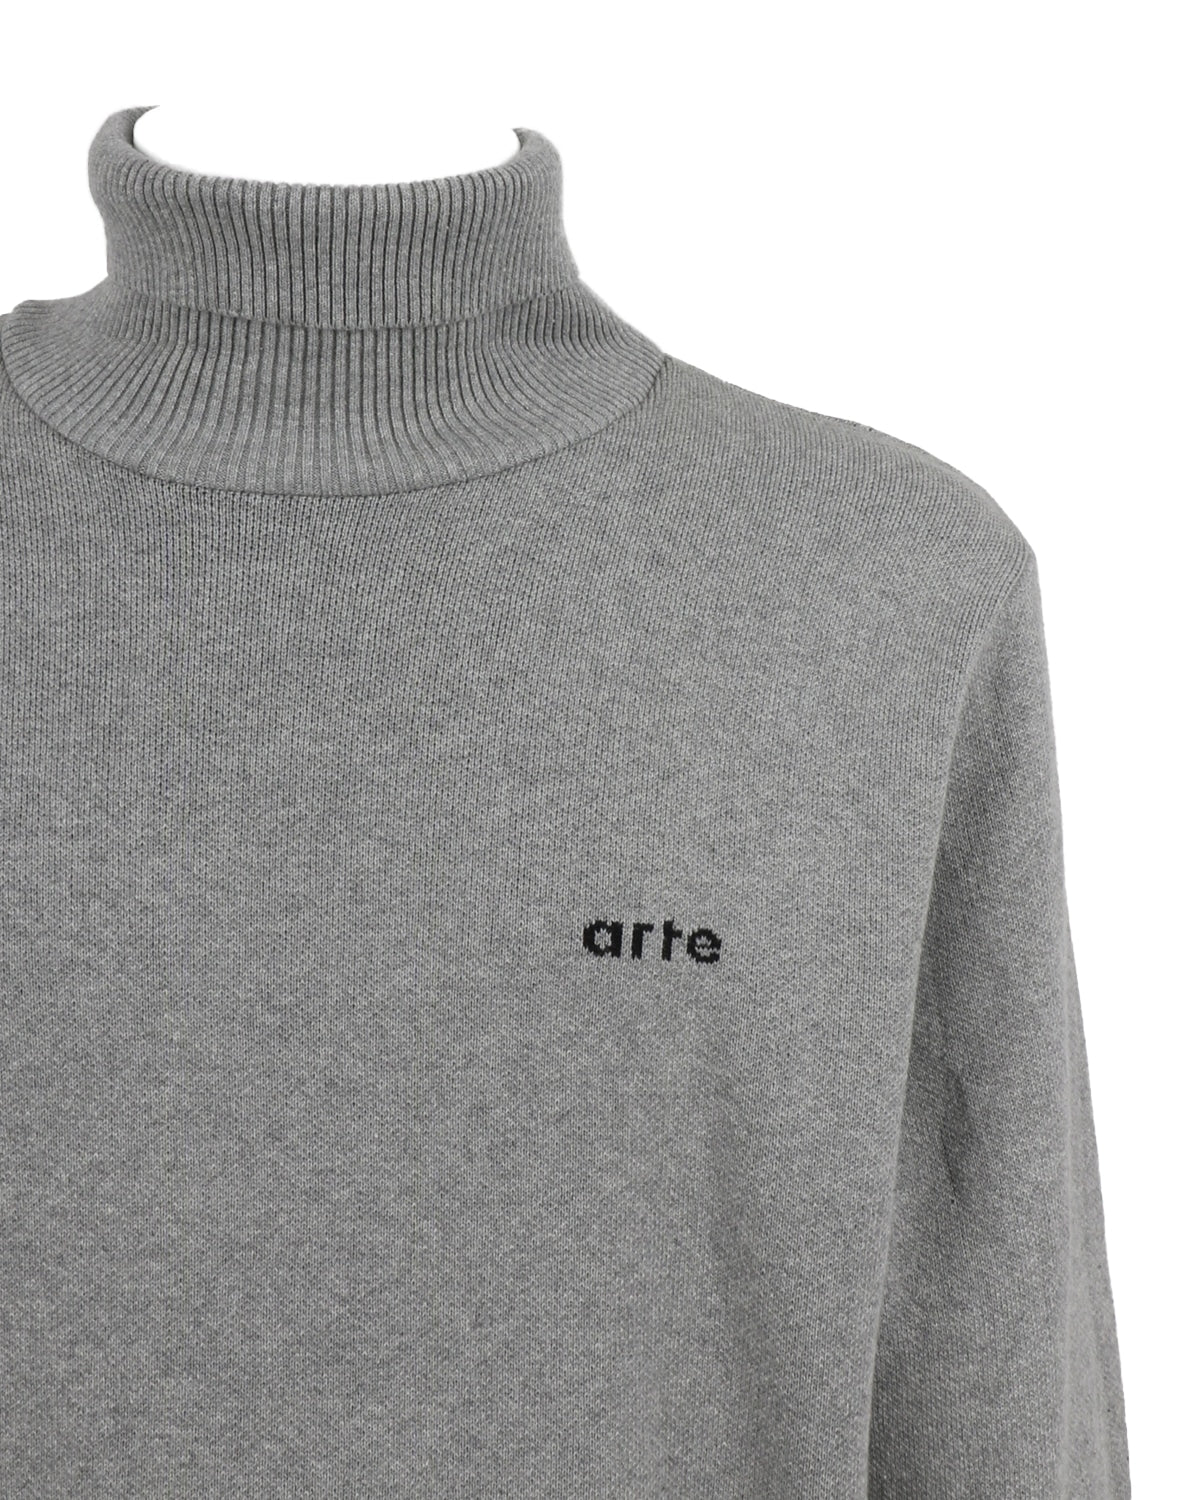 Kole Sweater, grey